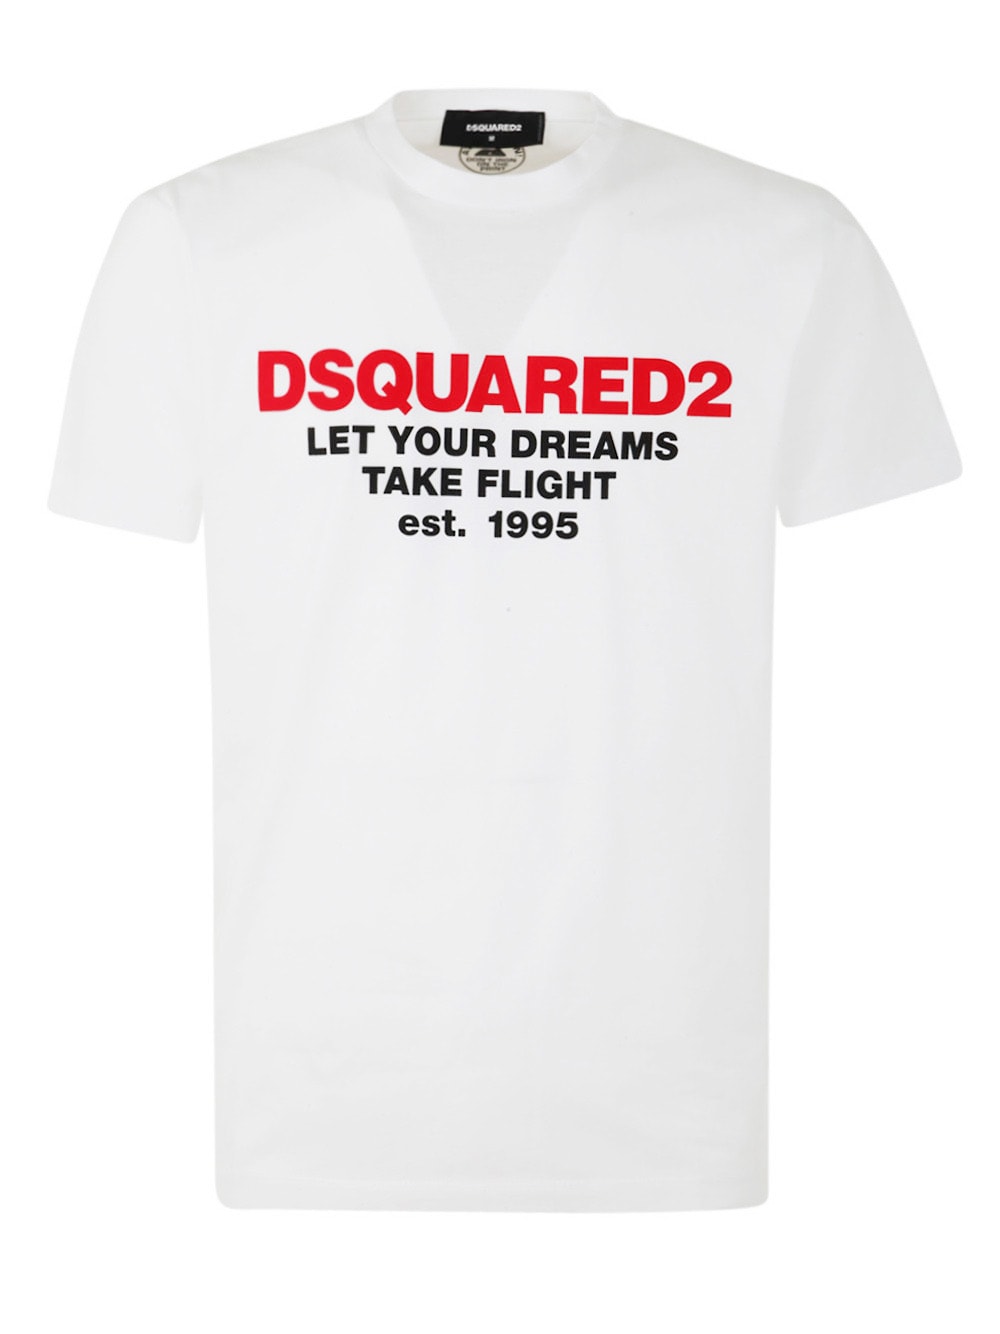 Dsquared2 Dream Flight Cool T